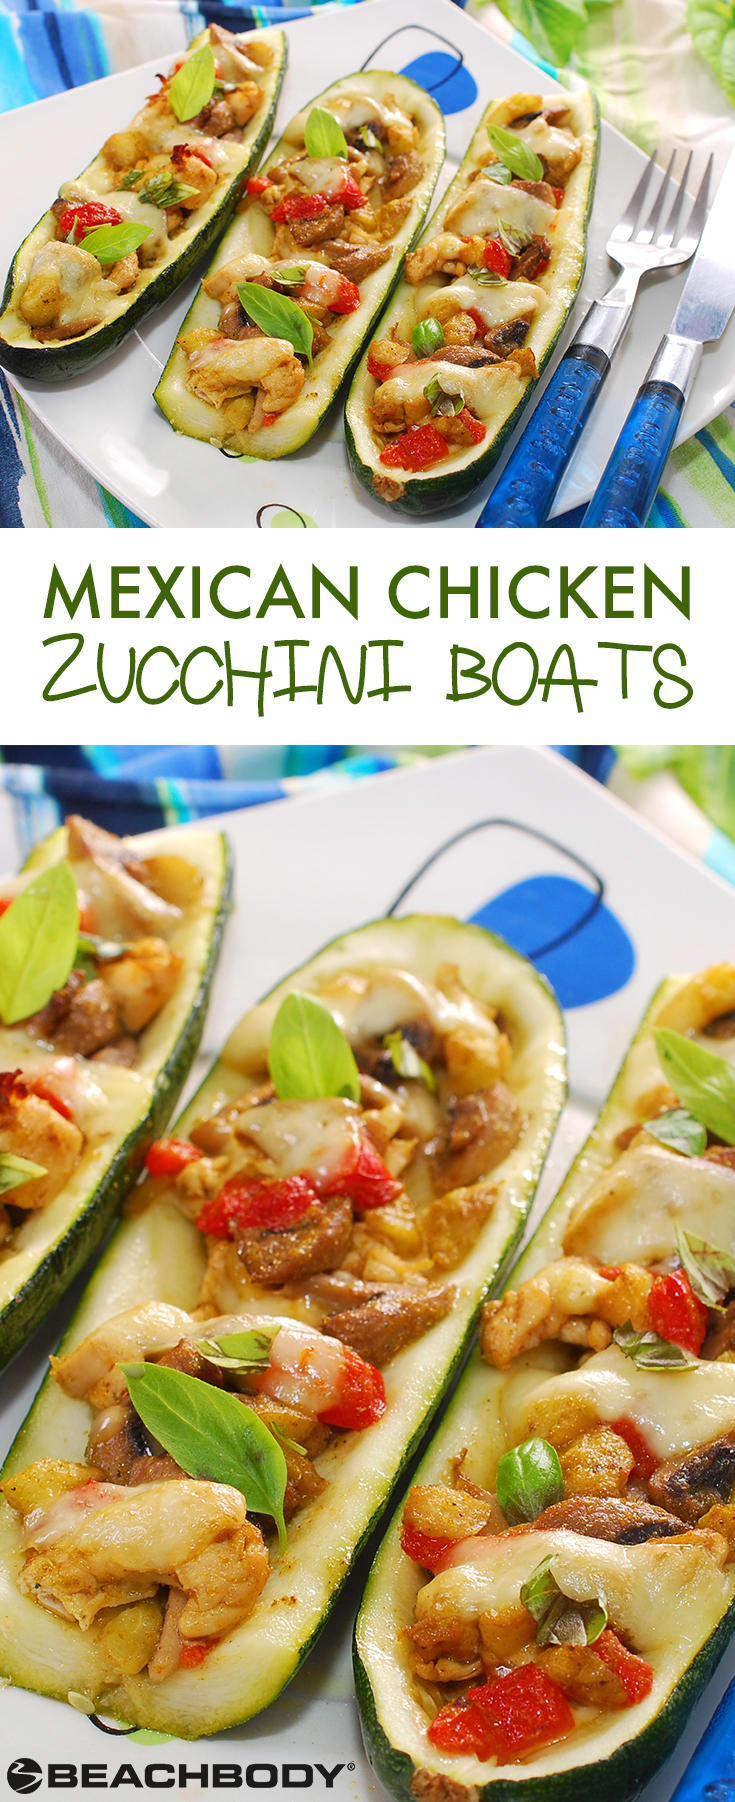 Mexican Chicken Zucchini Boats | BeachbodyBlog.com